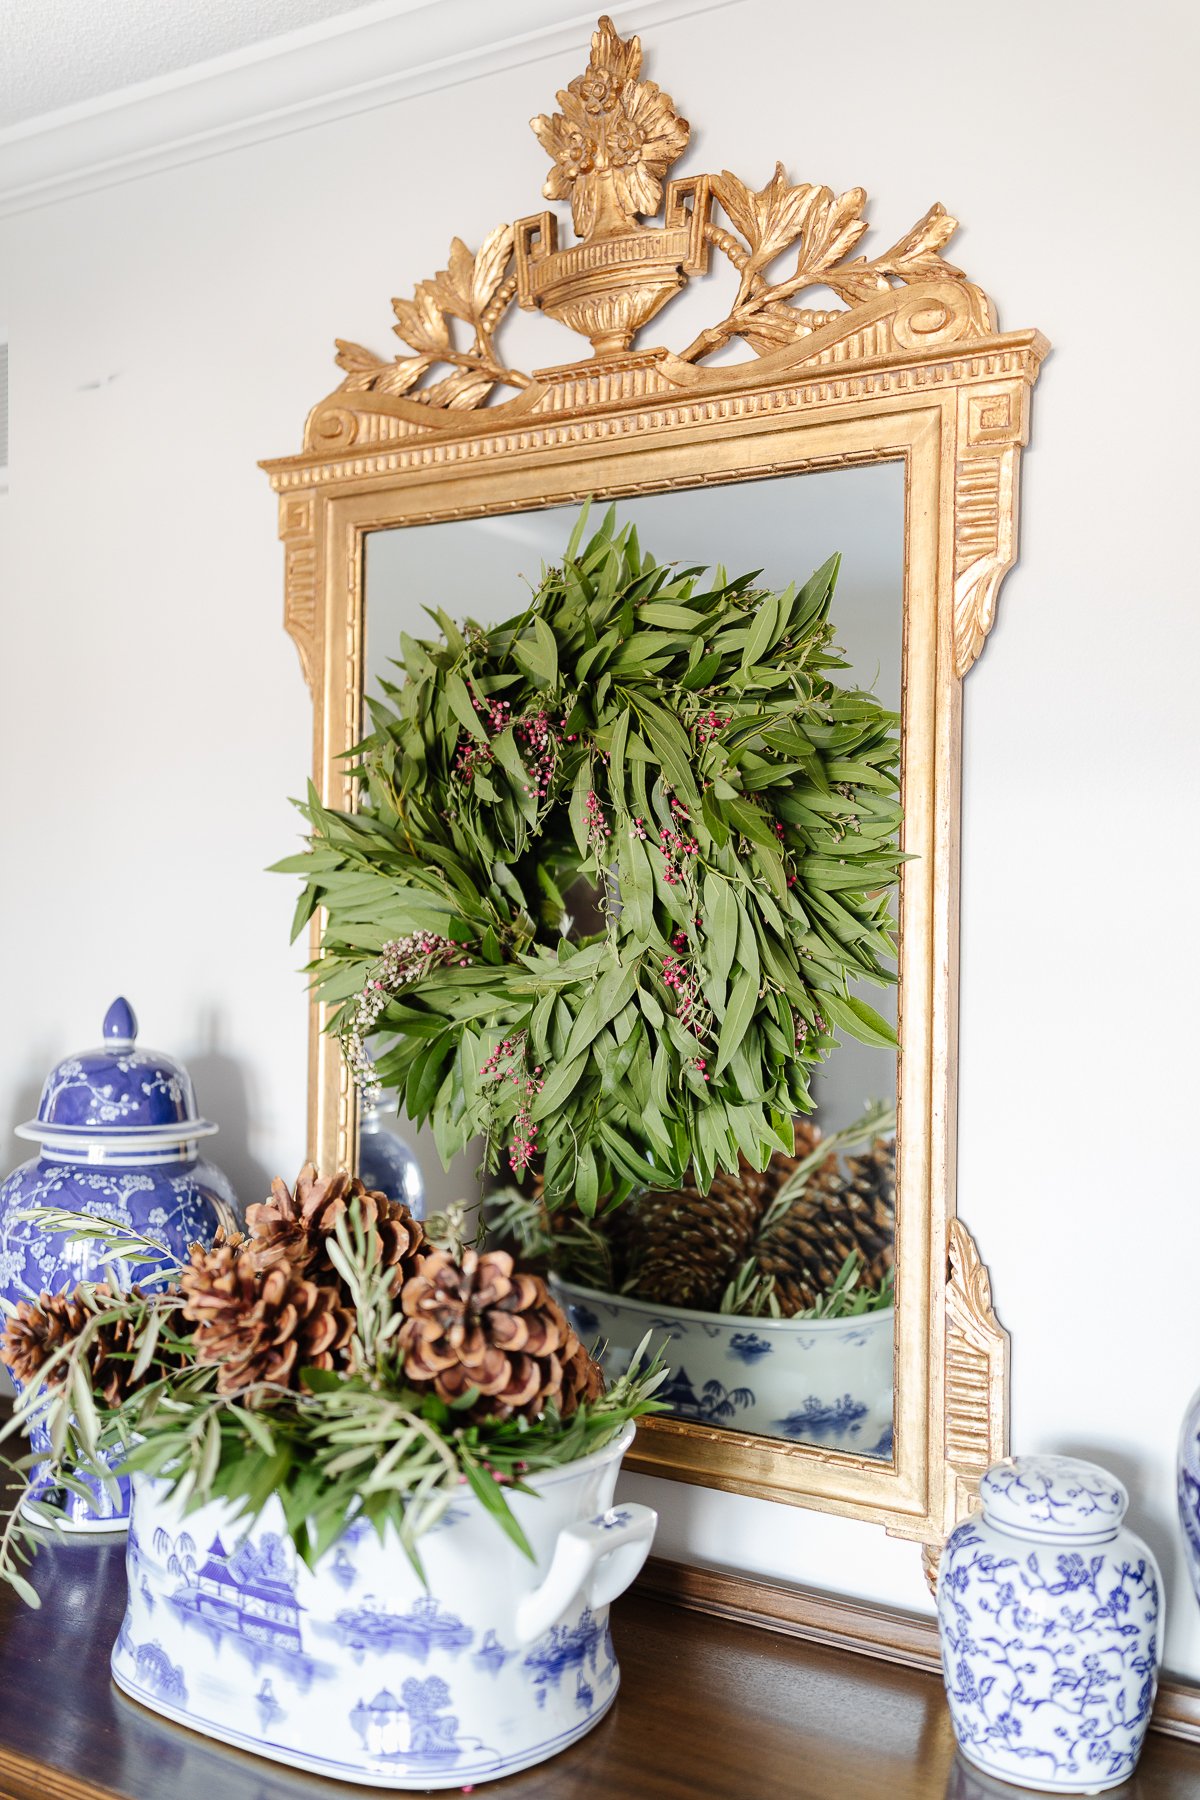 A Christmas wreath adorns a mirror in a house.